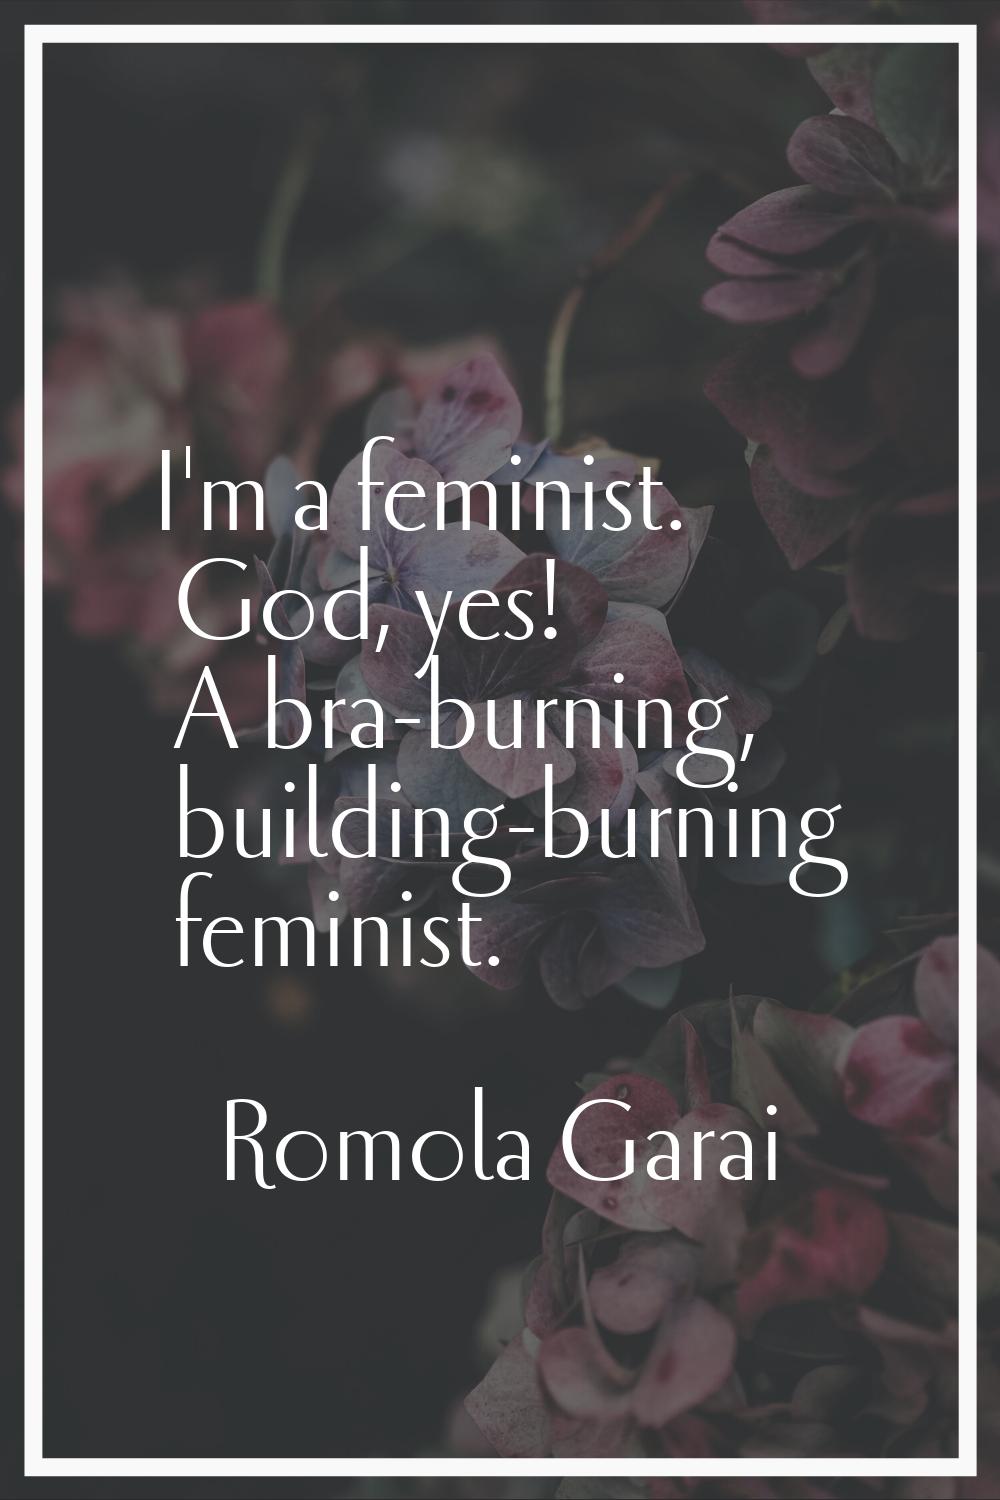 I'm a feminist. God, yes! A bra-burning, building-burning feminist.